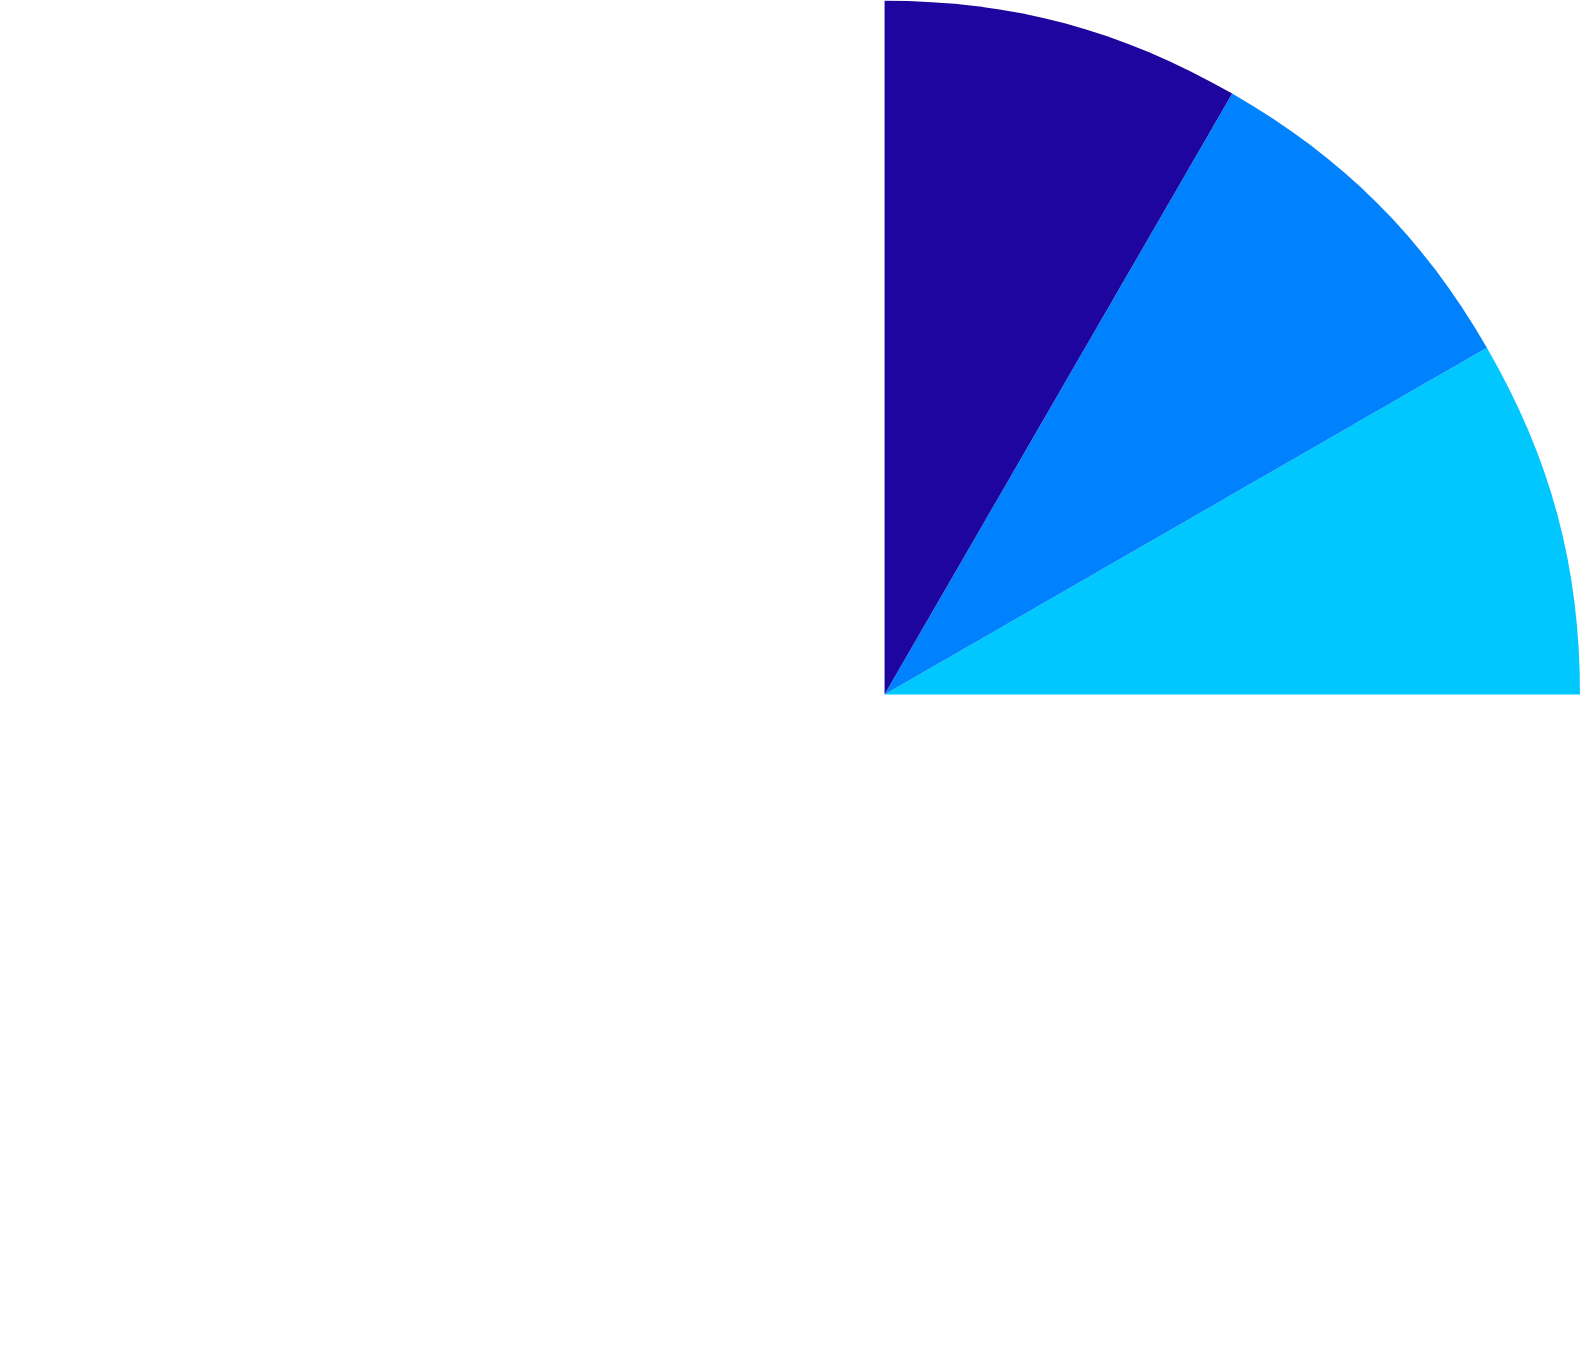 Radius Global Infrastructure logo large for dark backgrounds (transparent PNG)